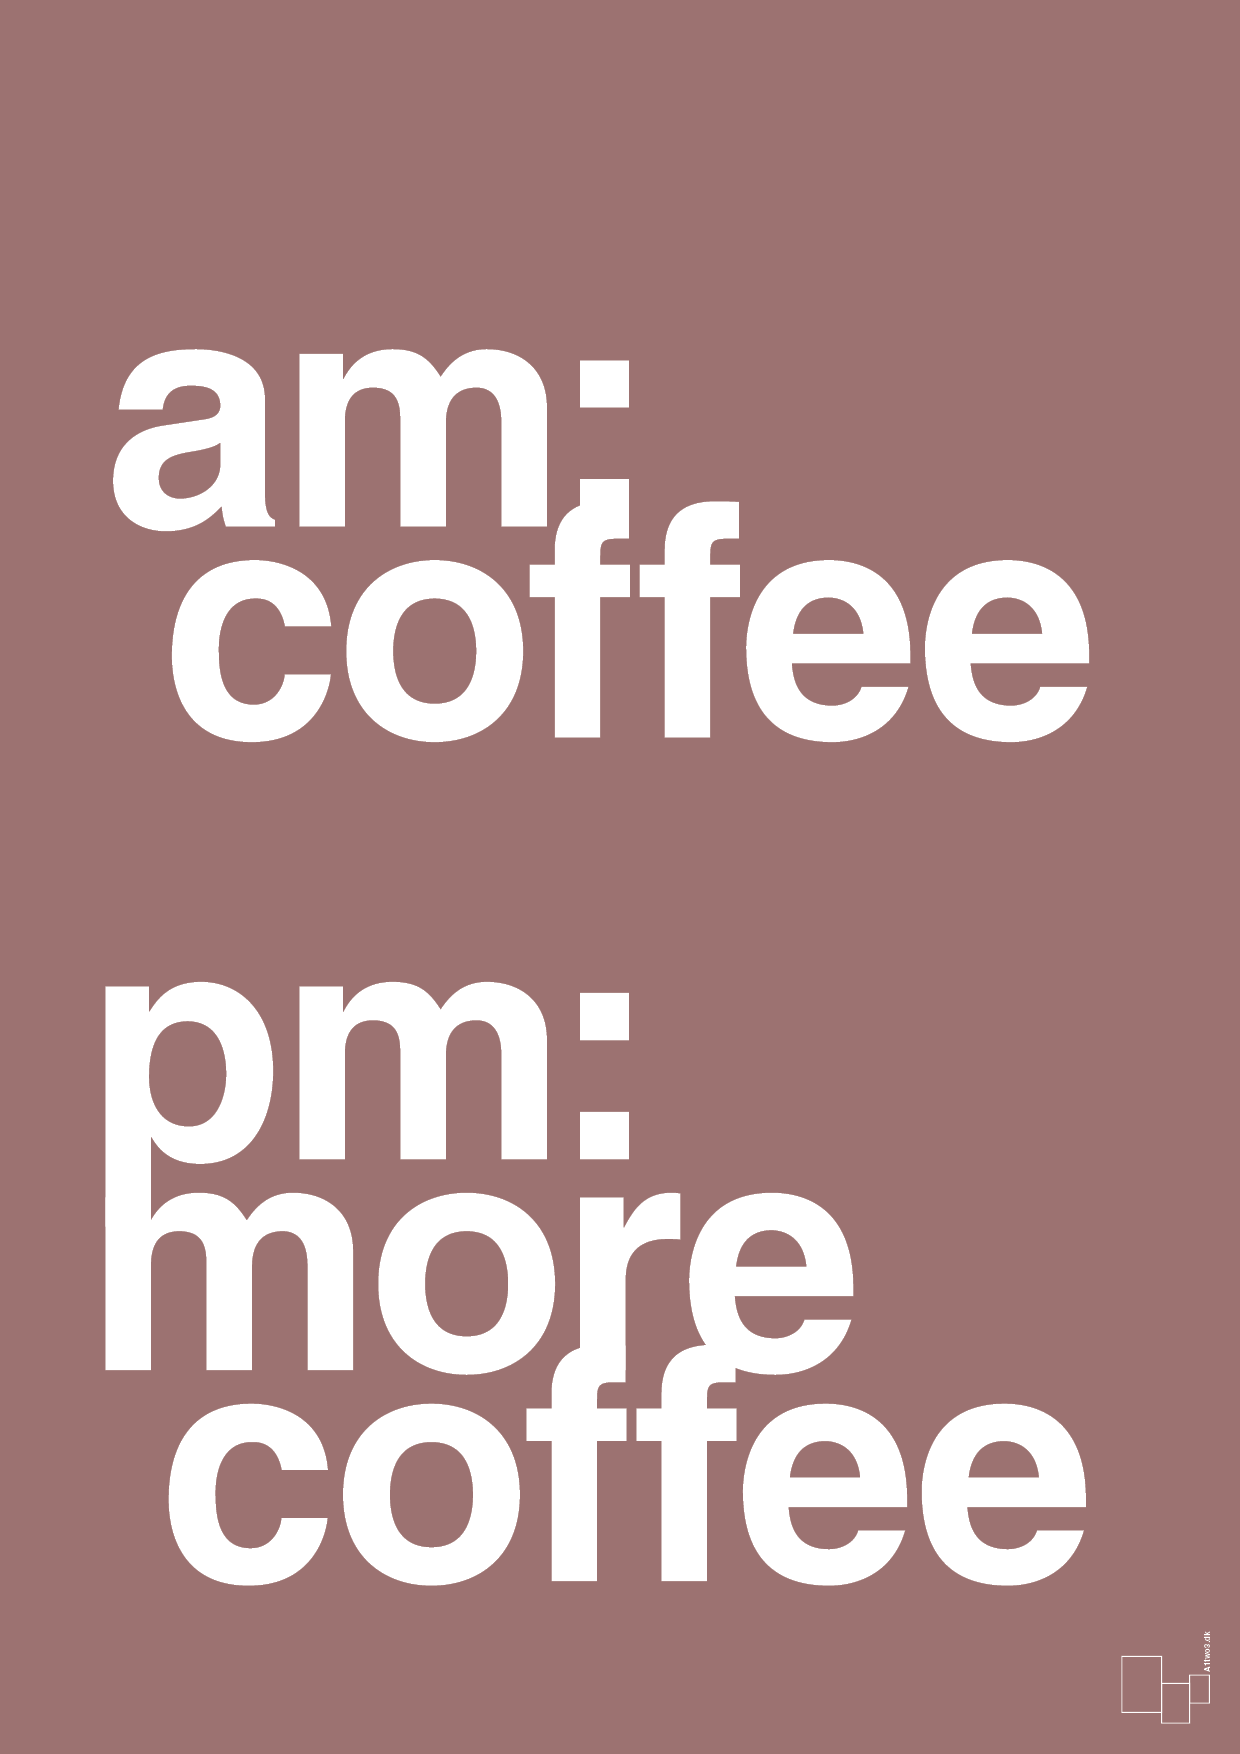 am coffee pm more coffee - Plakat med Ordsprog i Plum